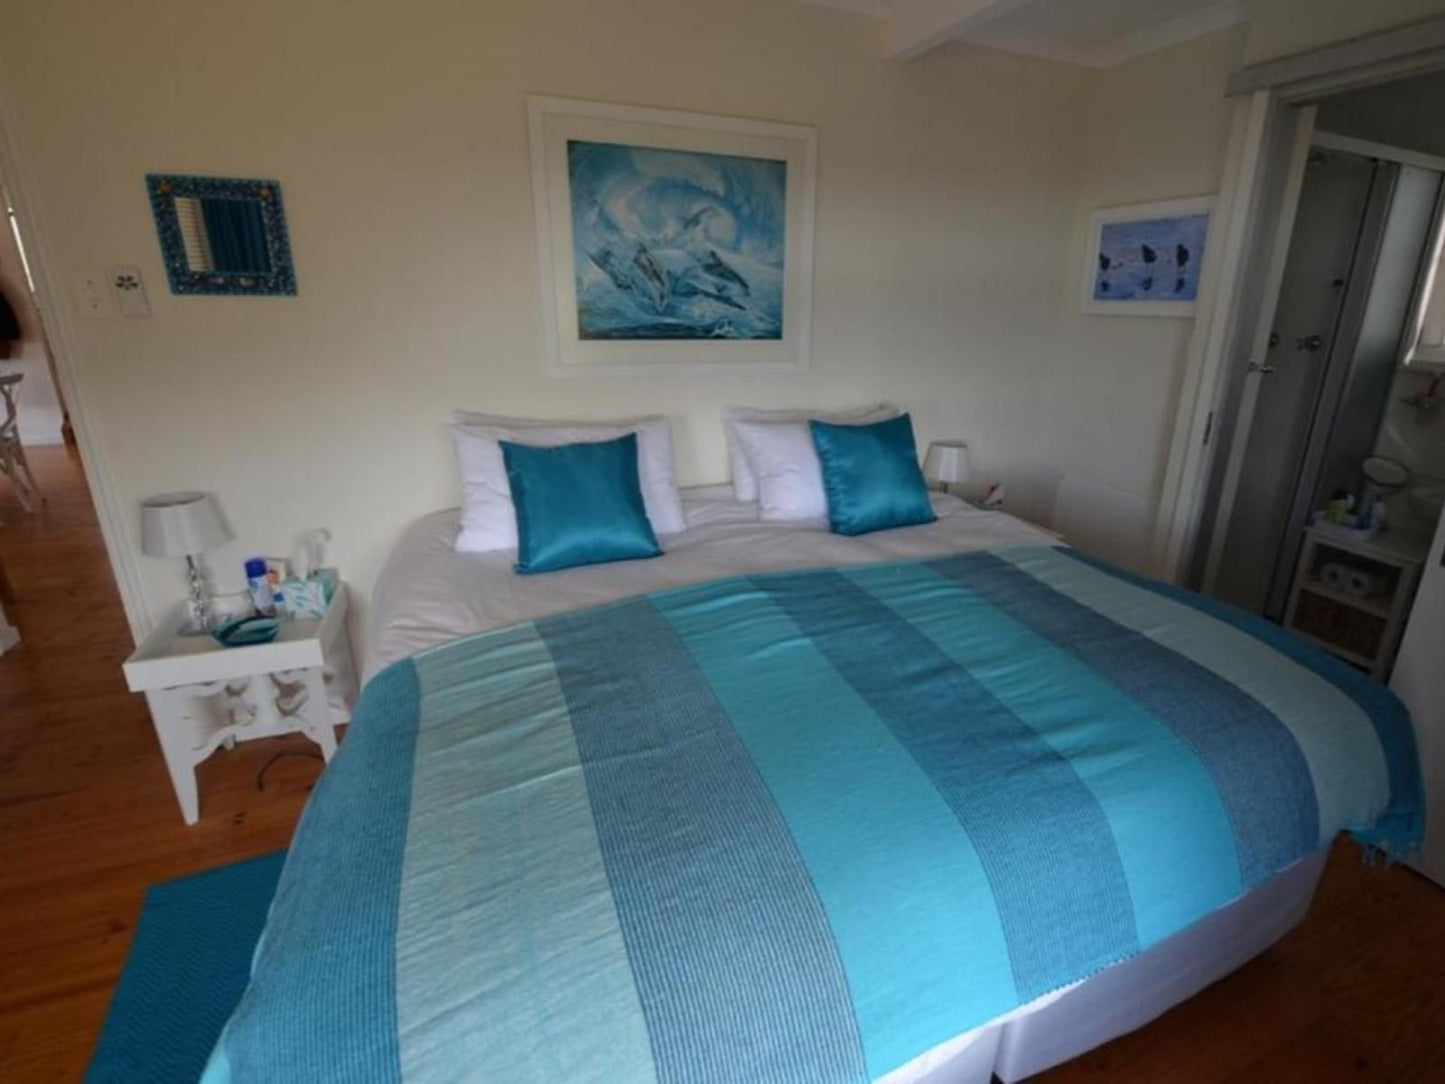 Mermaid S Tail Pringle Bay Pringle Bay Western Cape South Africa Bedroom